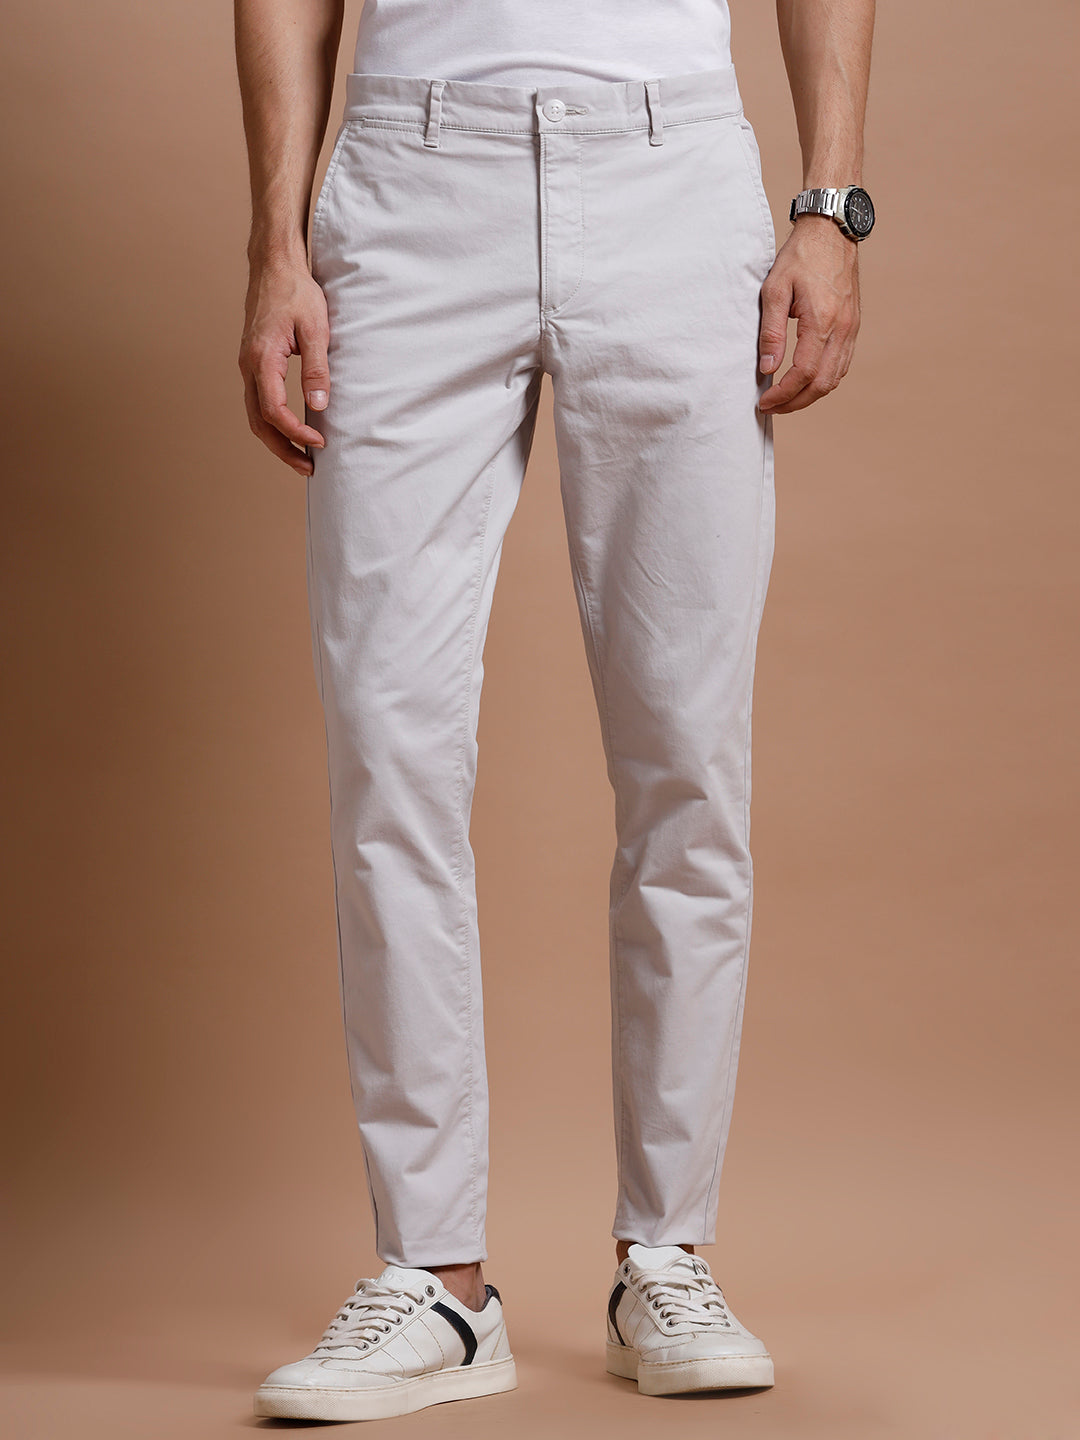 Lt Grey  Smart Casual Cotton Trouser